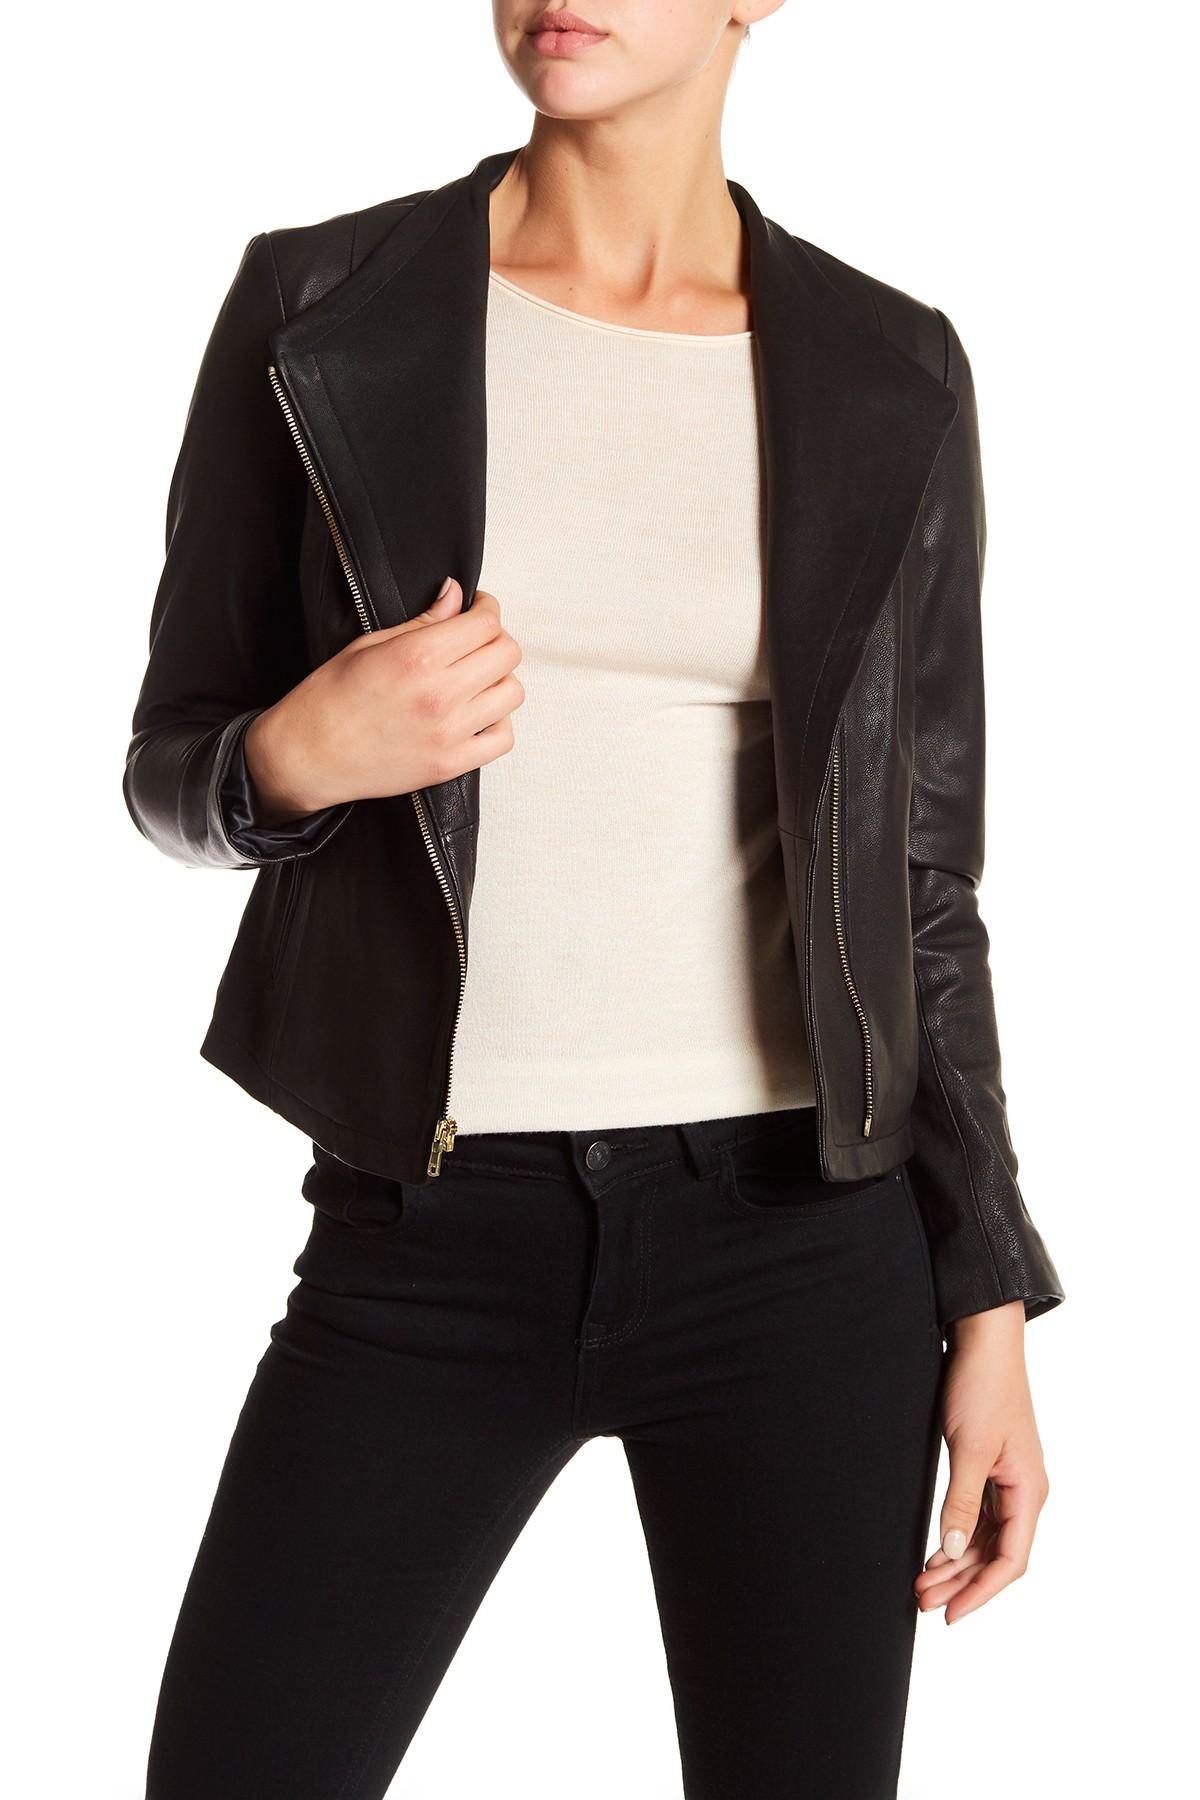 Lyst - Cole Haan Asymmetrical Front Zip Genuine Leather Jacket in Black